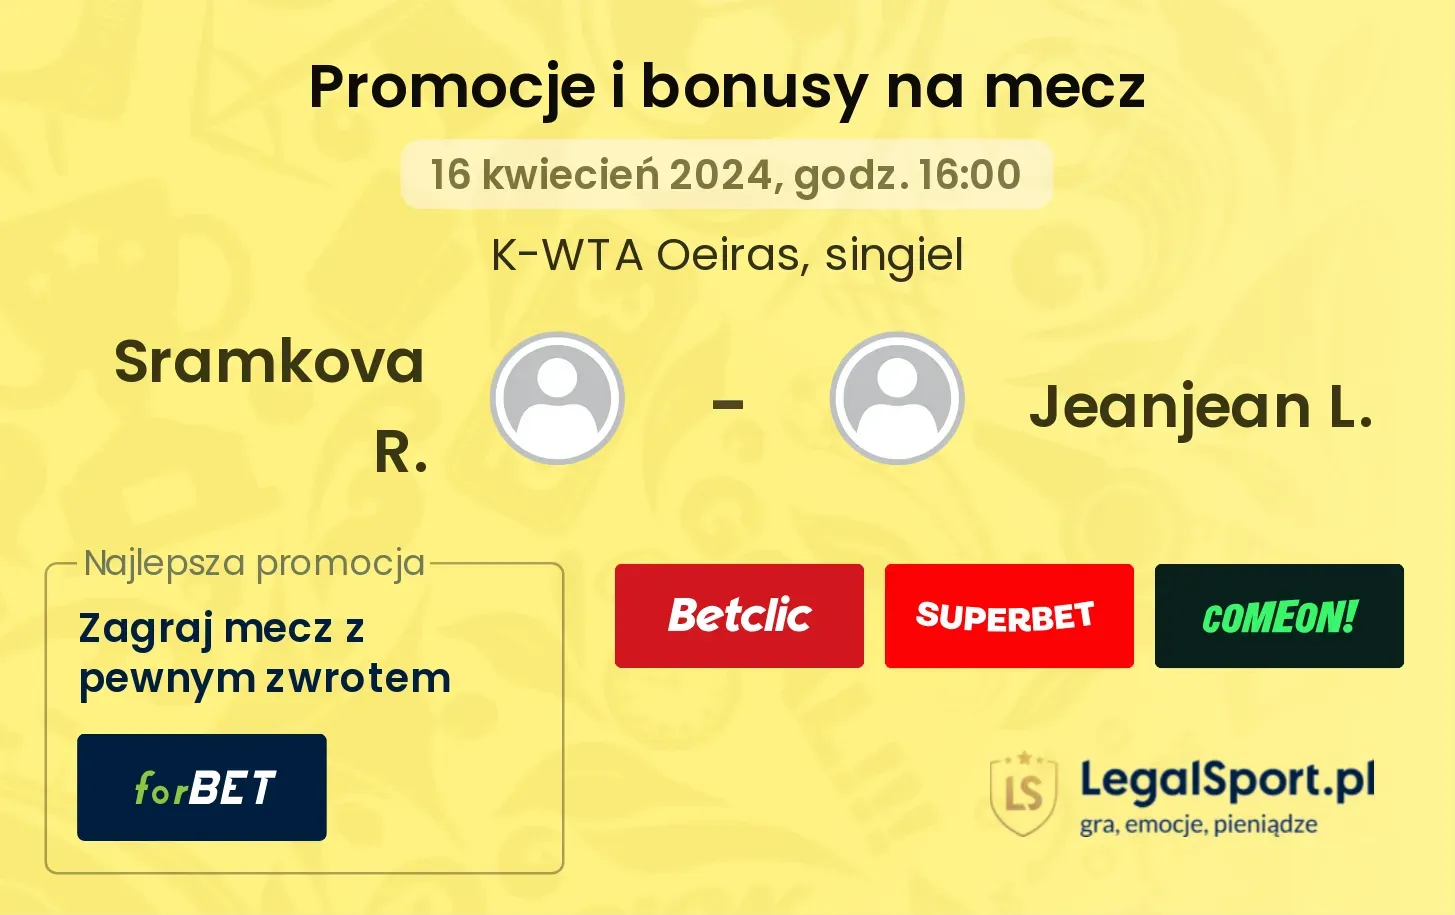 Sramkova R. - Jeanjean L. promocje bonusy na mecz